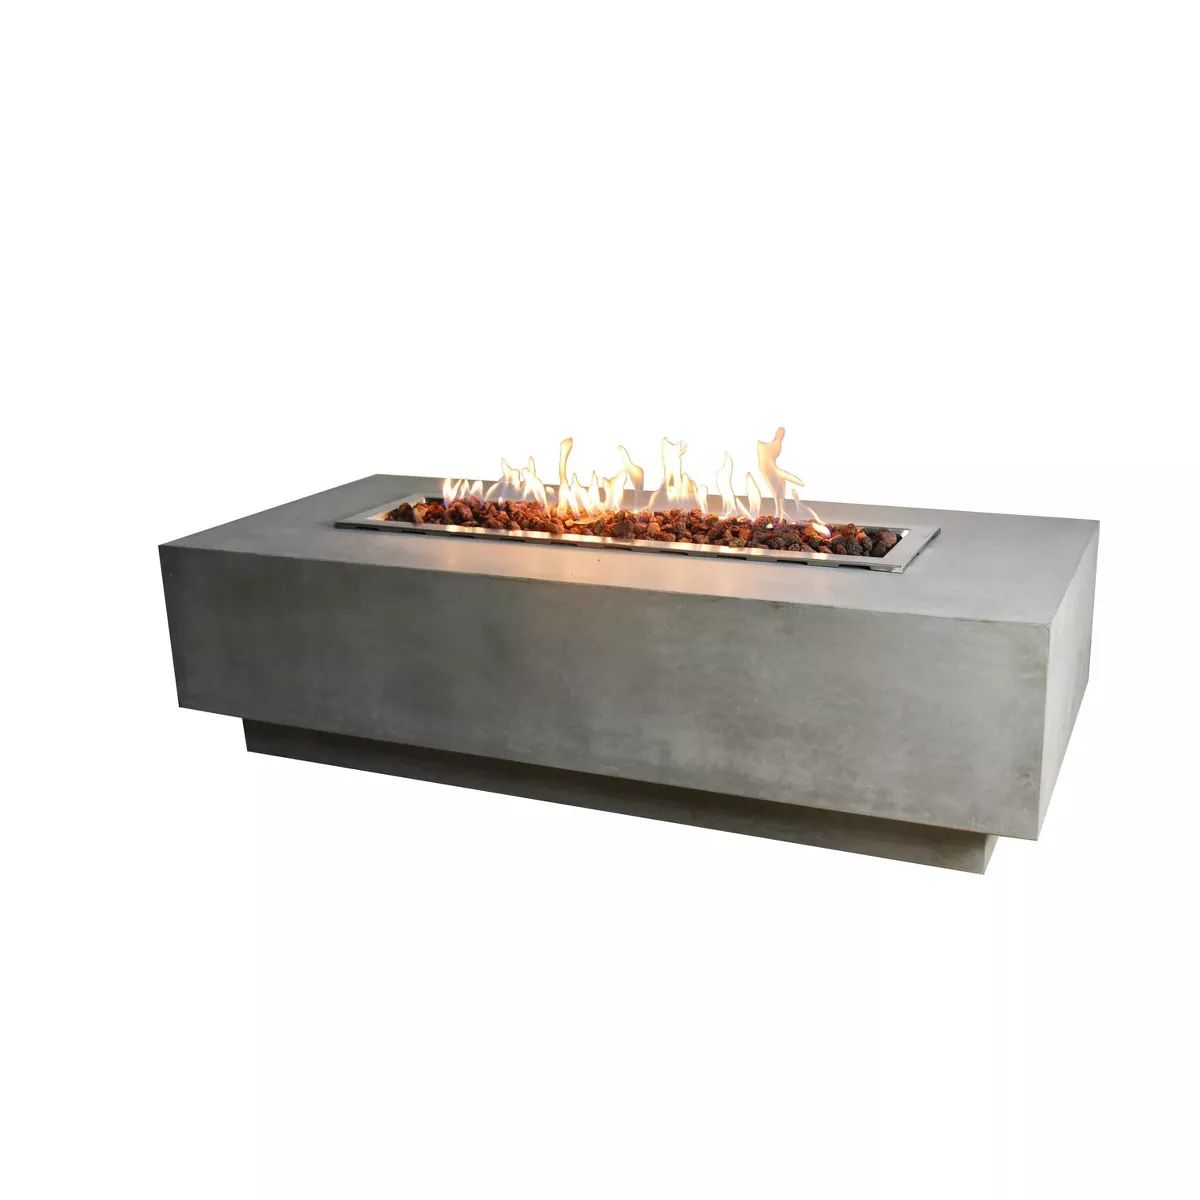 Granville 60" Outdoor Fire Pit Propane Table Backyard Patio Heater - Elementi | Target